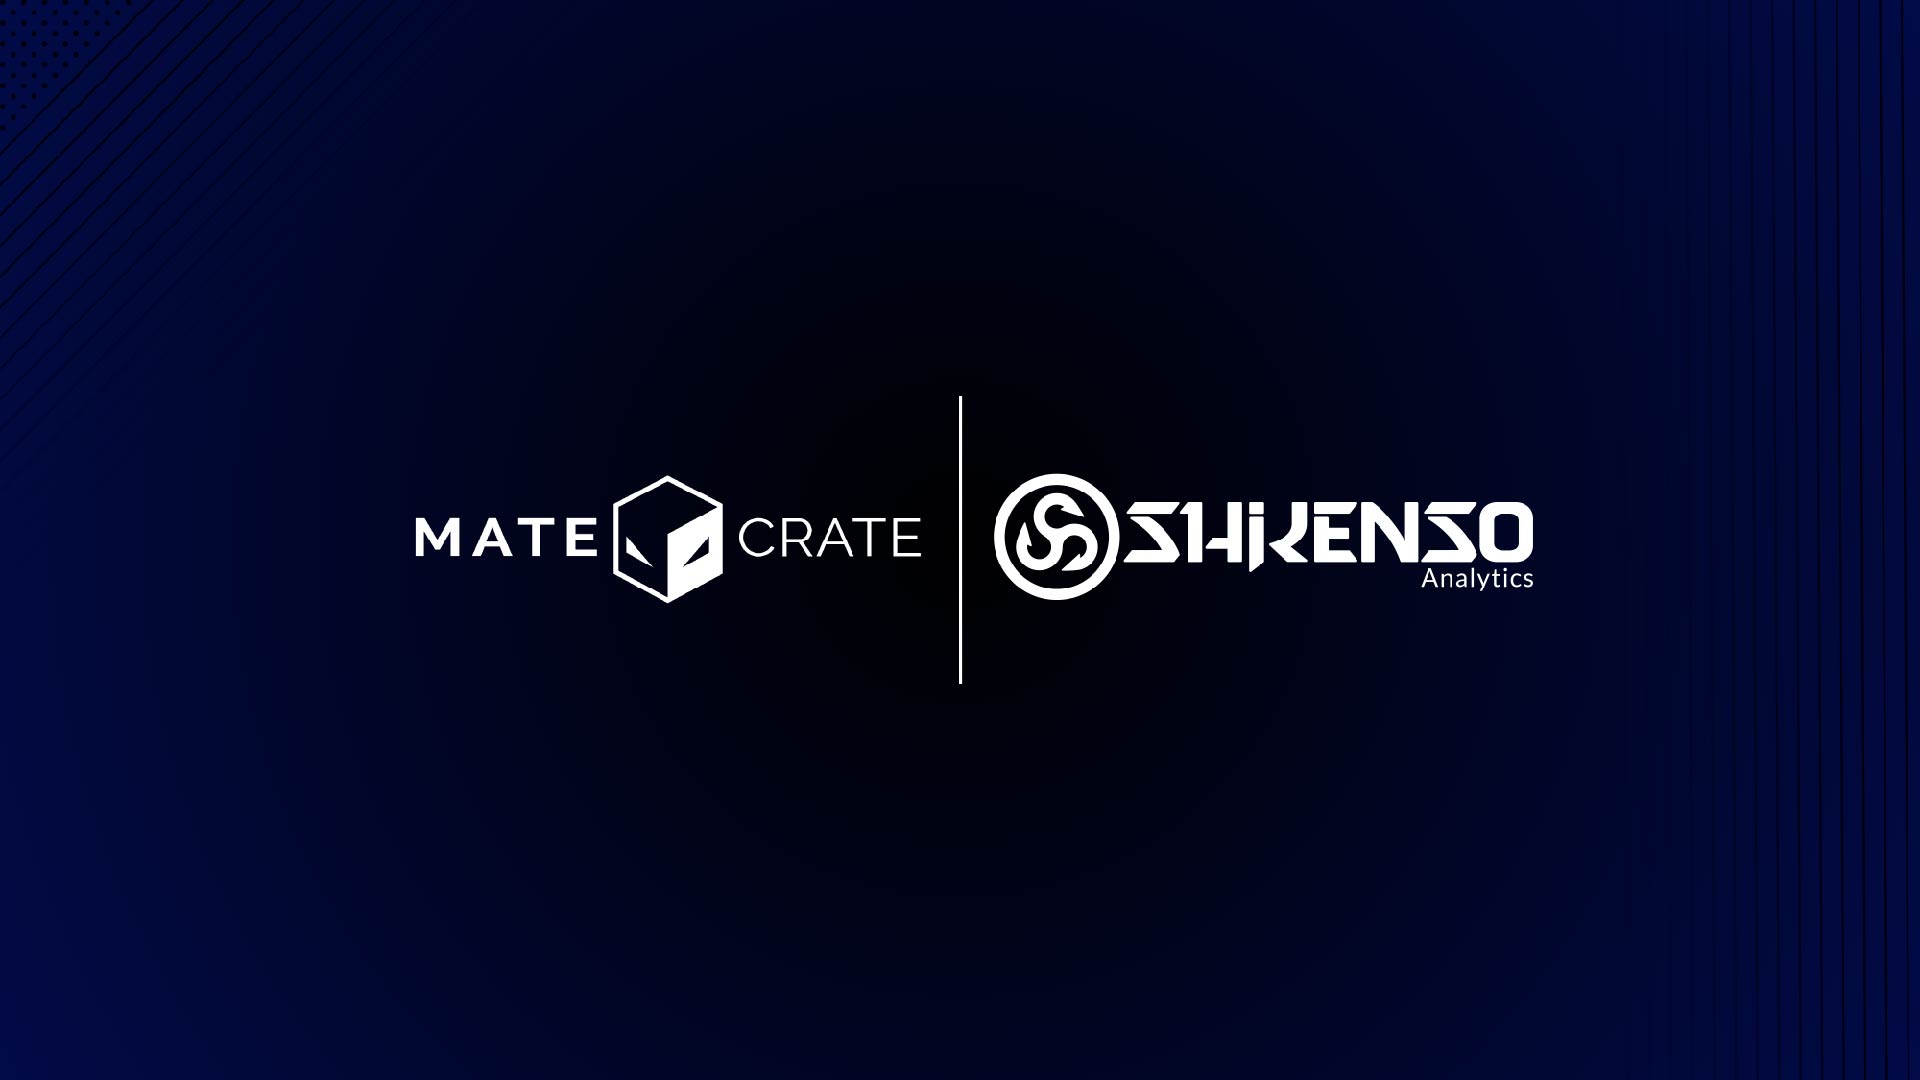 MateCrate together with Ubisoft Establish Sponsorship Data Partnership with Shikenso